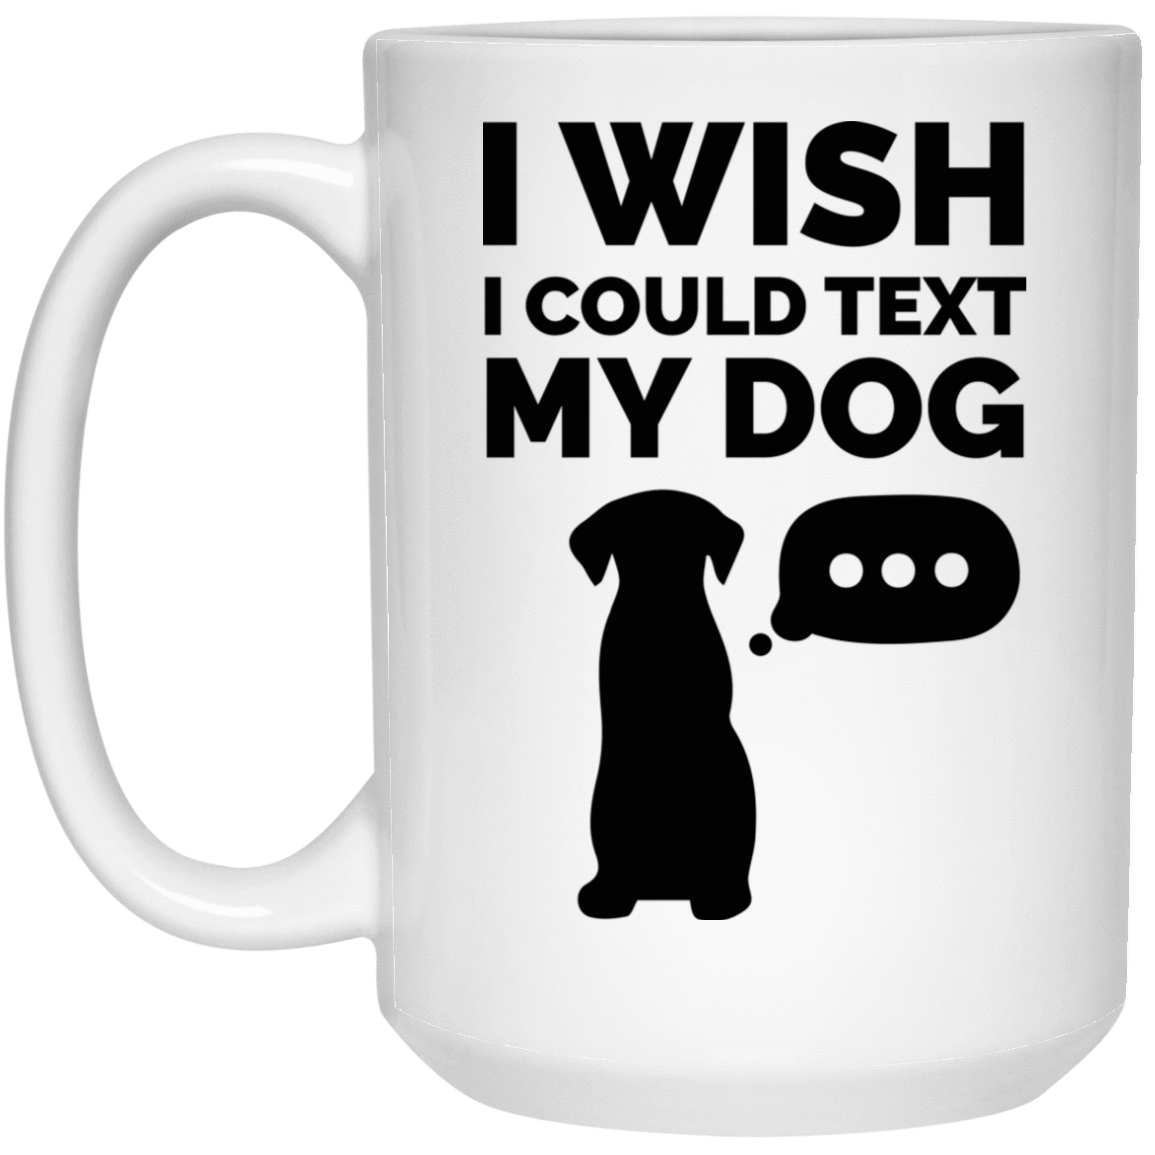 I Wish I Could Text My Dog - Mug.